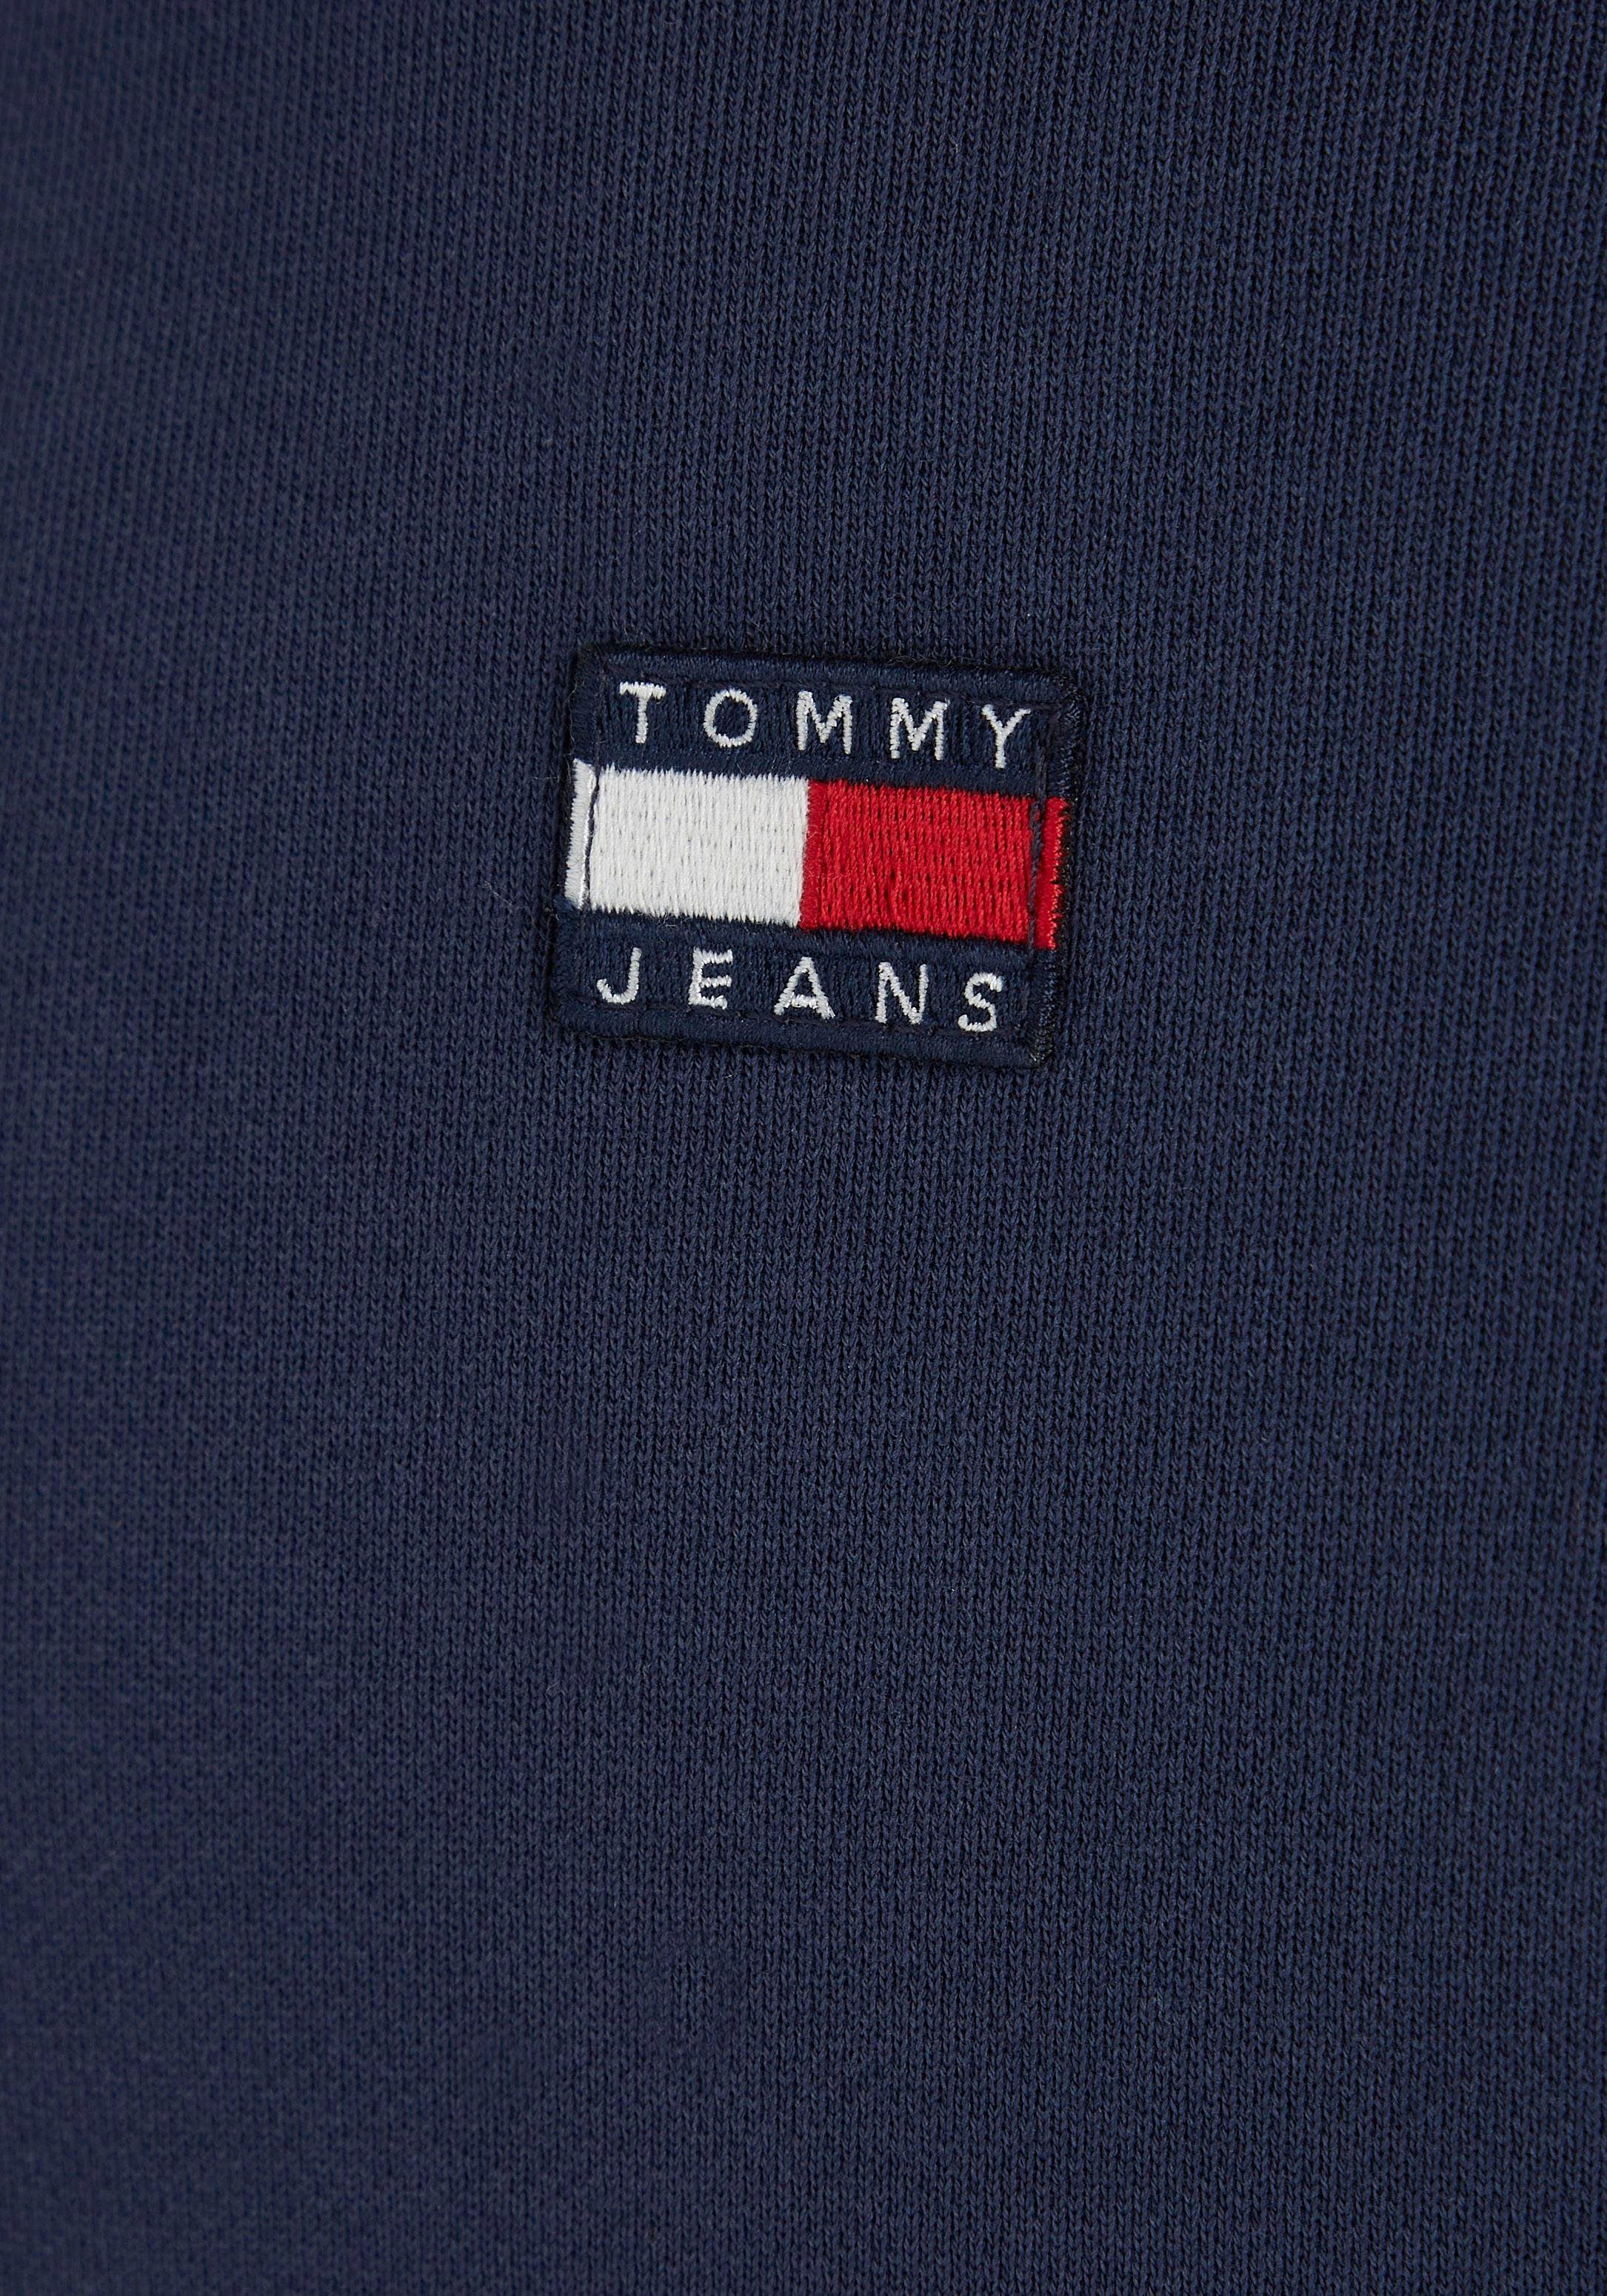 Jeans XS Navy Twilight Stickerei TJM Sweatshirt BADGE mit Jeans RLX CREW Tommy Tommy